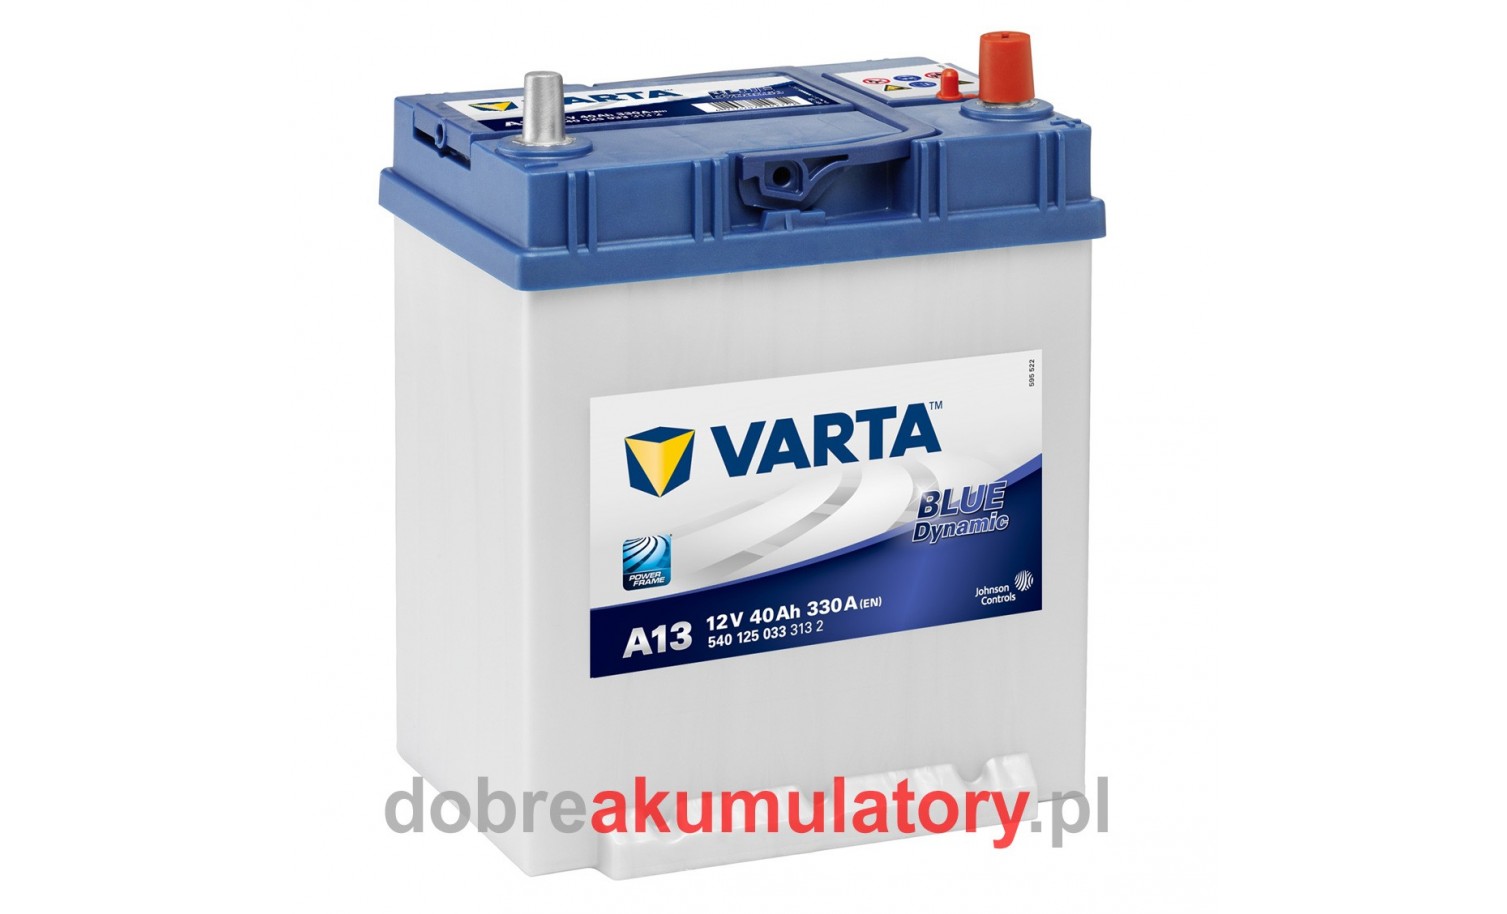 Varta 12V/40Ah 330A blue dynamic stopka